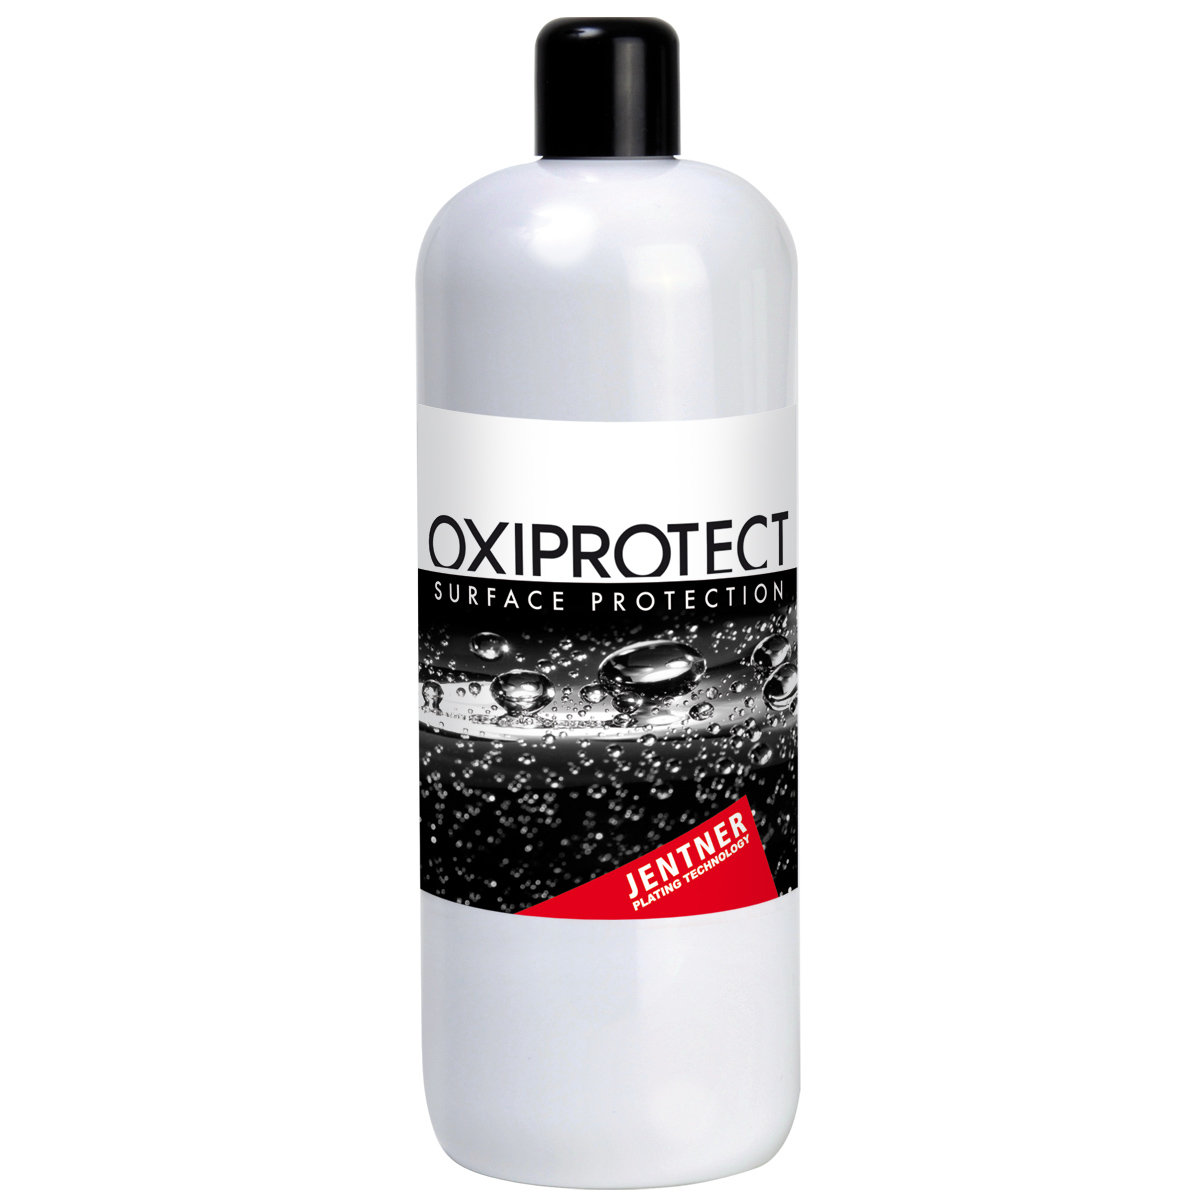 Anlaufschutzbad Oxiprotect Performance 1 Liter